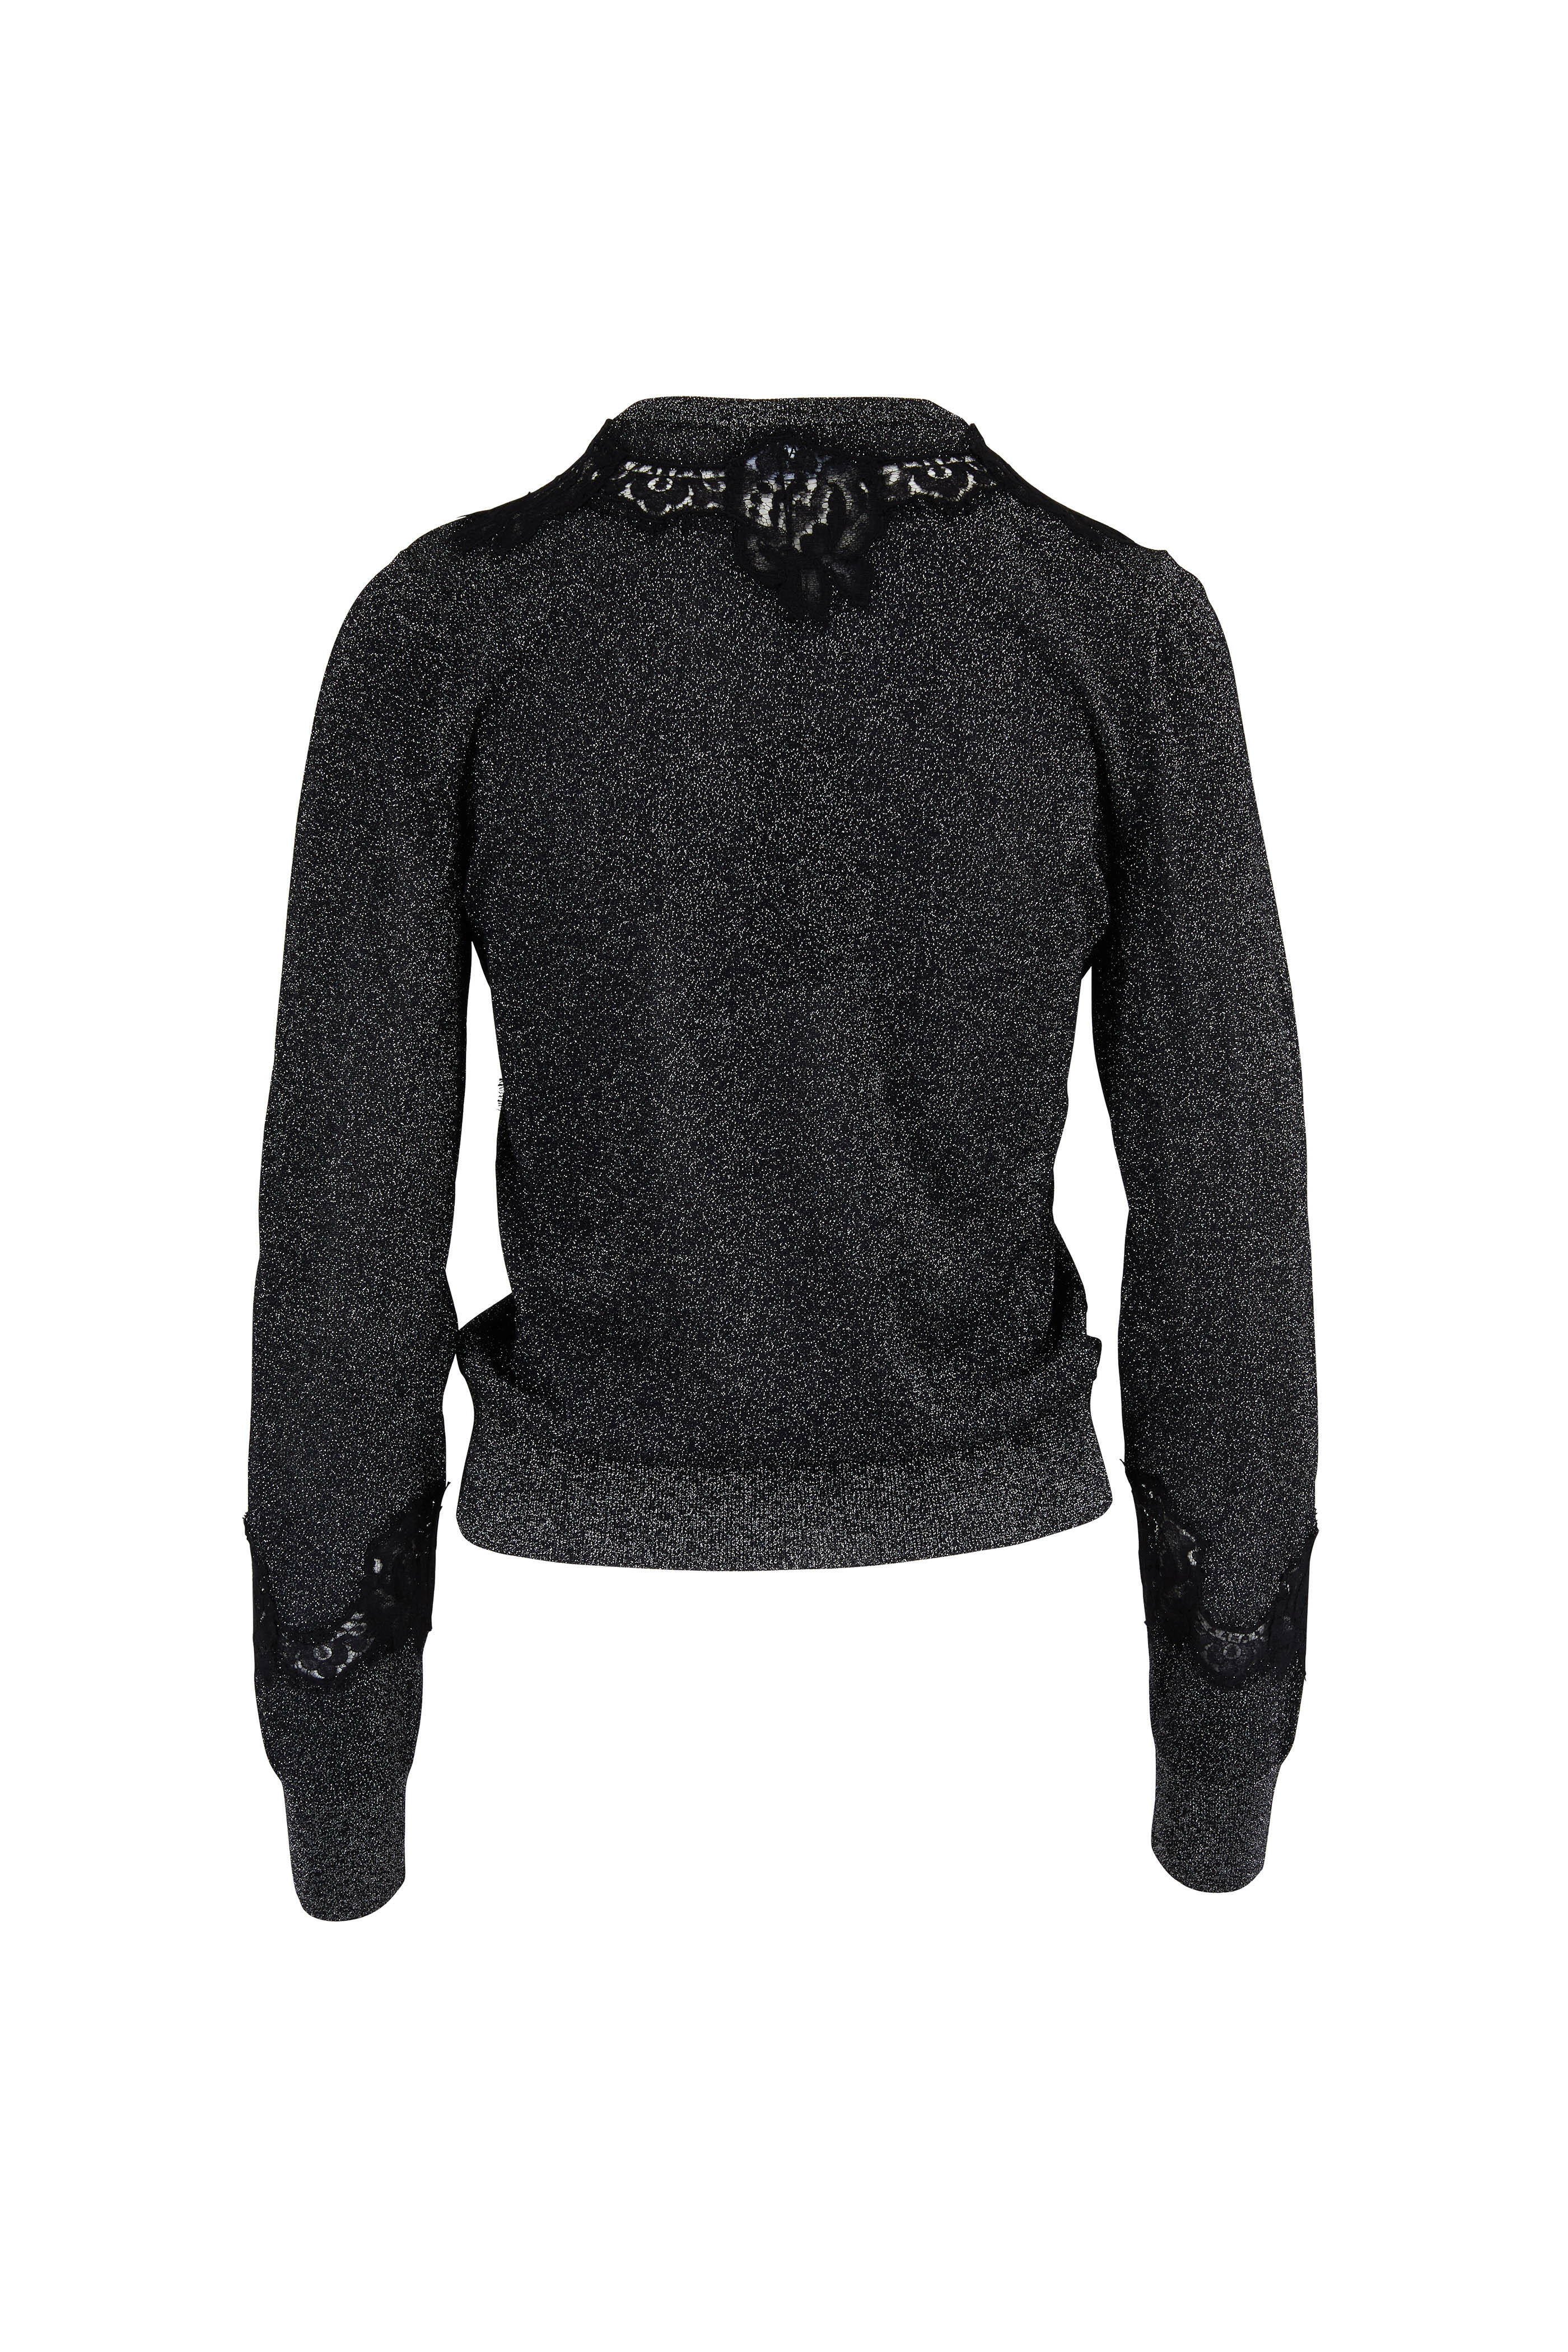 Dolce & Gabbana - Dark Gray Lace Trim Lurex Knit Sweater